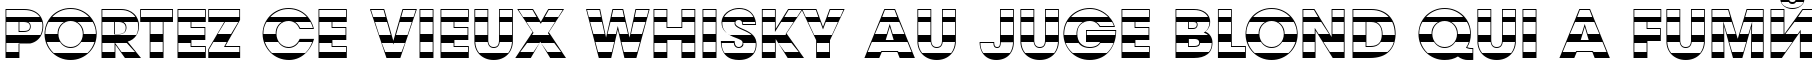 Пример написания шрифтом a_AvanteTitulStr Heavy текста на французском